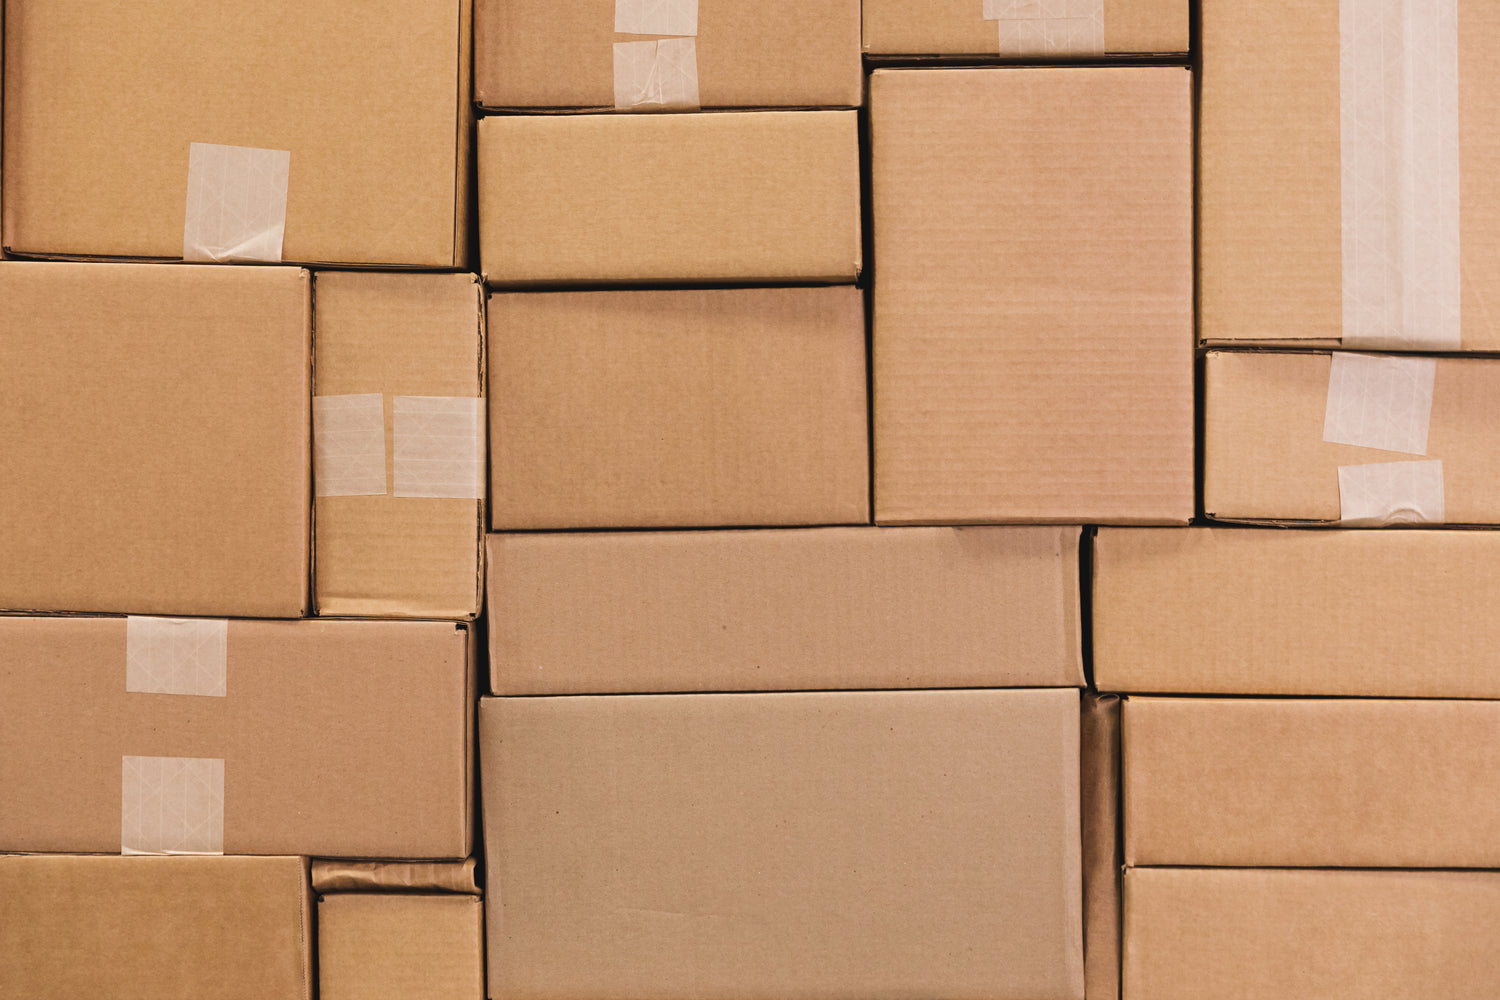 Cardboard boxes in a tetris pattern